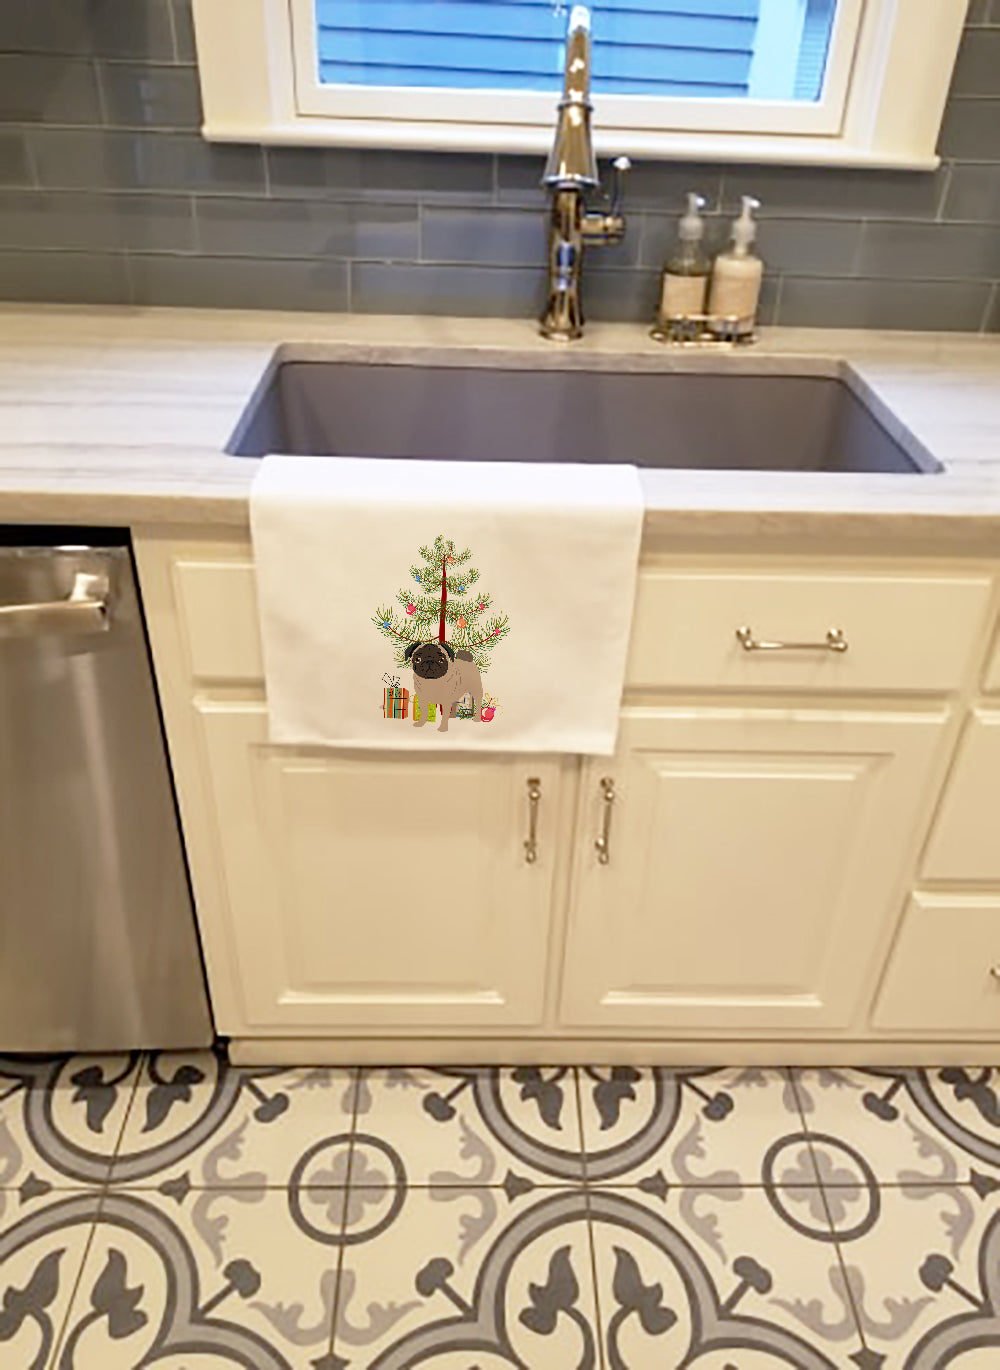 Buy this Pug Fawn #4 Christmas White Kitchen Towel Set of 2